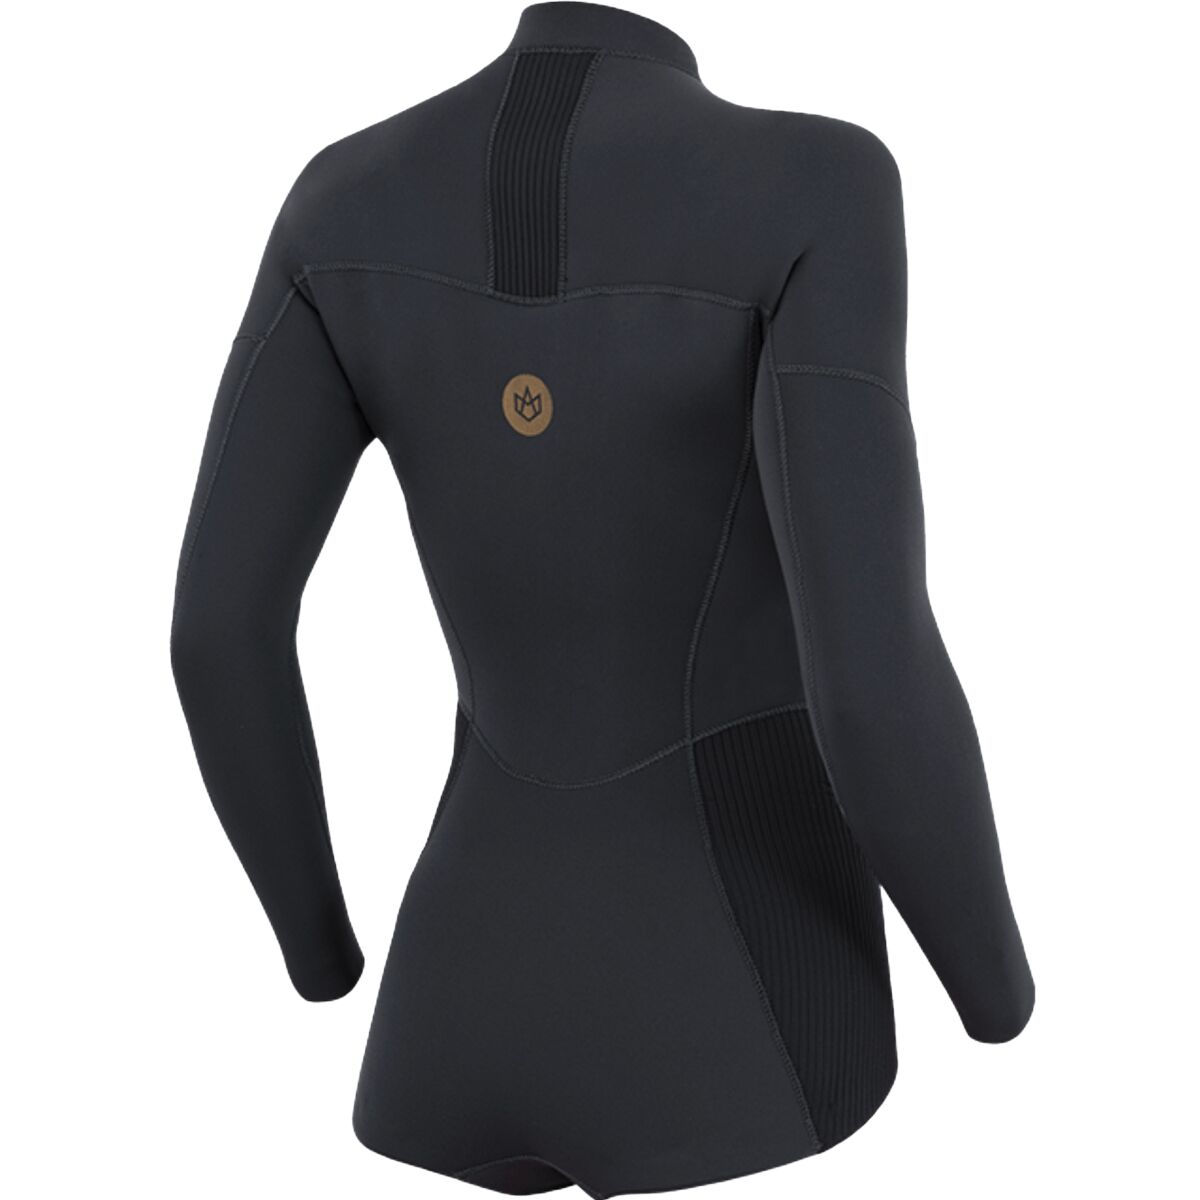 Manera Bikisuit FZ 2mm Wetsuit - Women's - Clothing